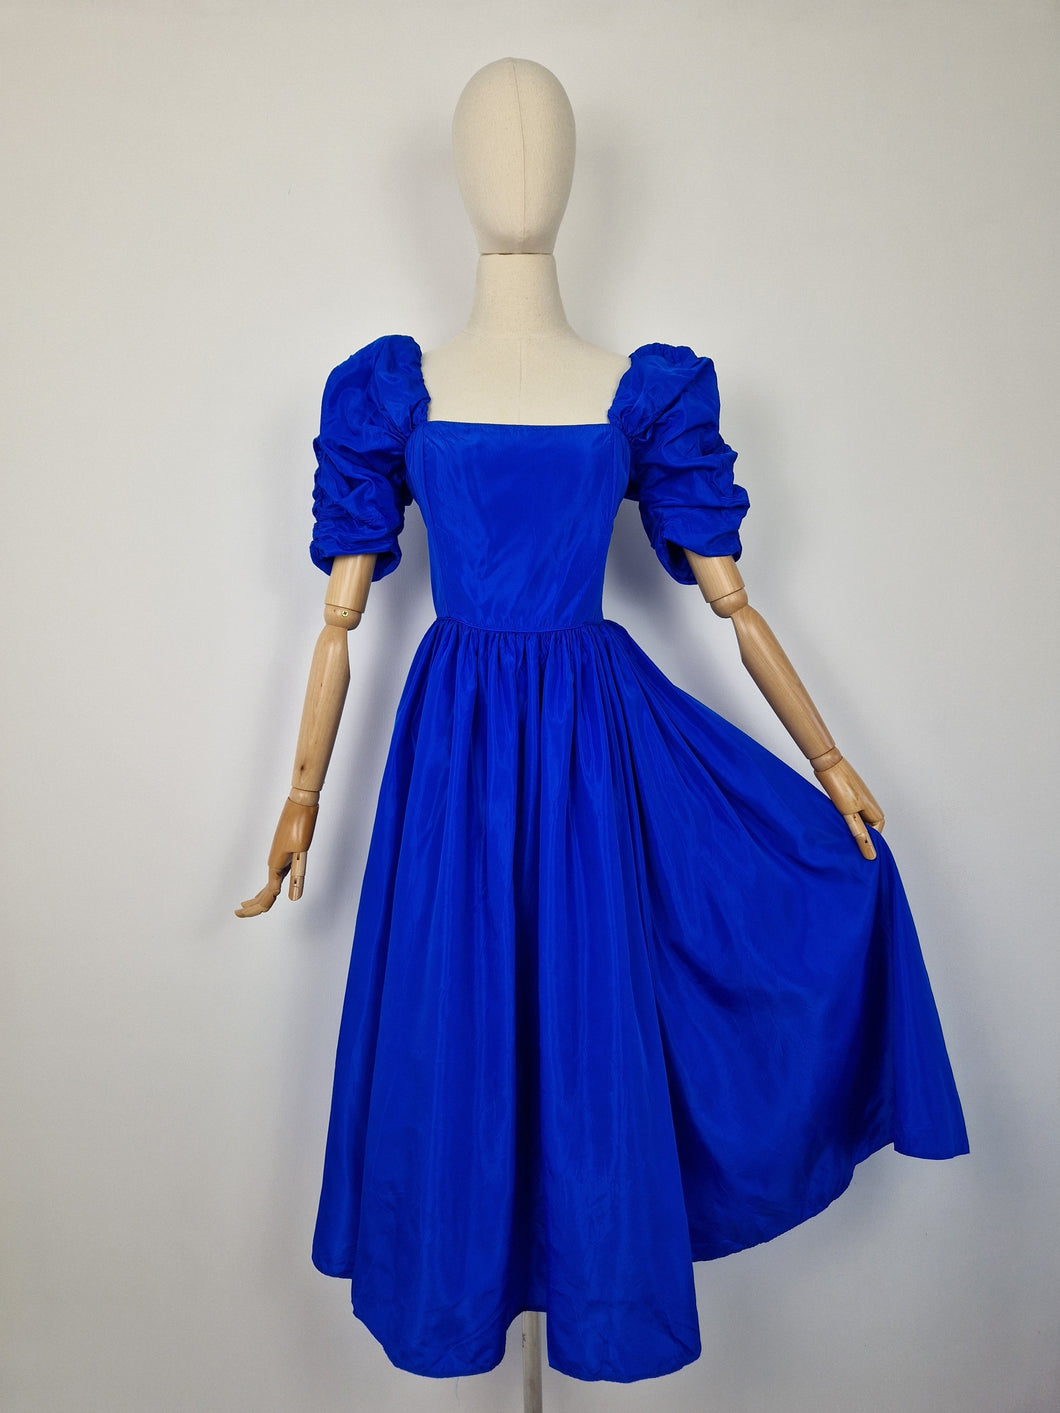 Vintage 80s Laura Ashley blue taffeta ballgown dress